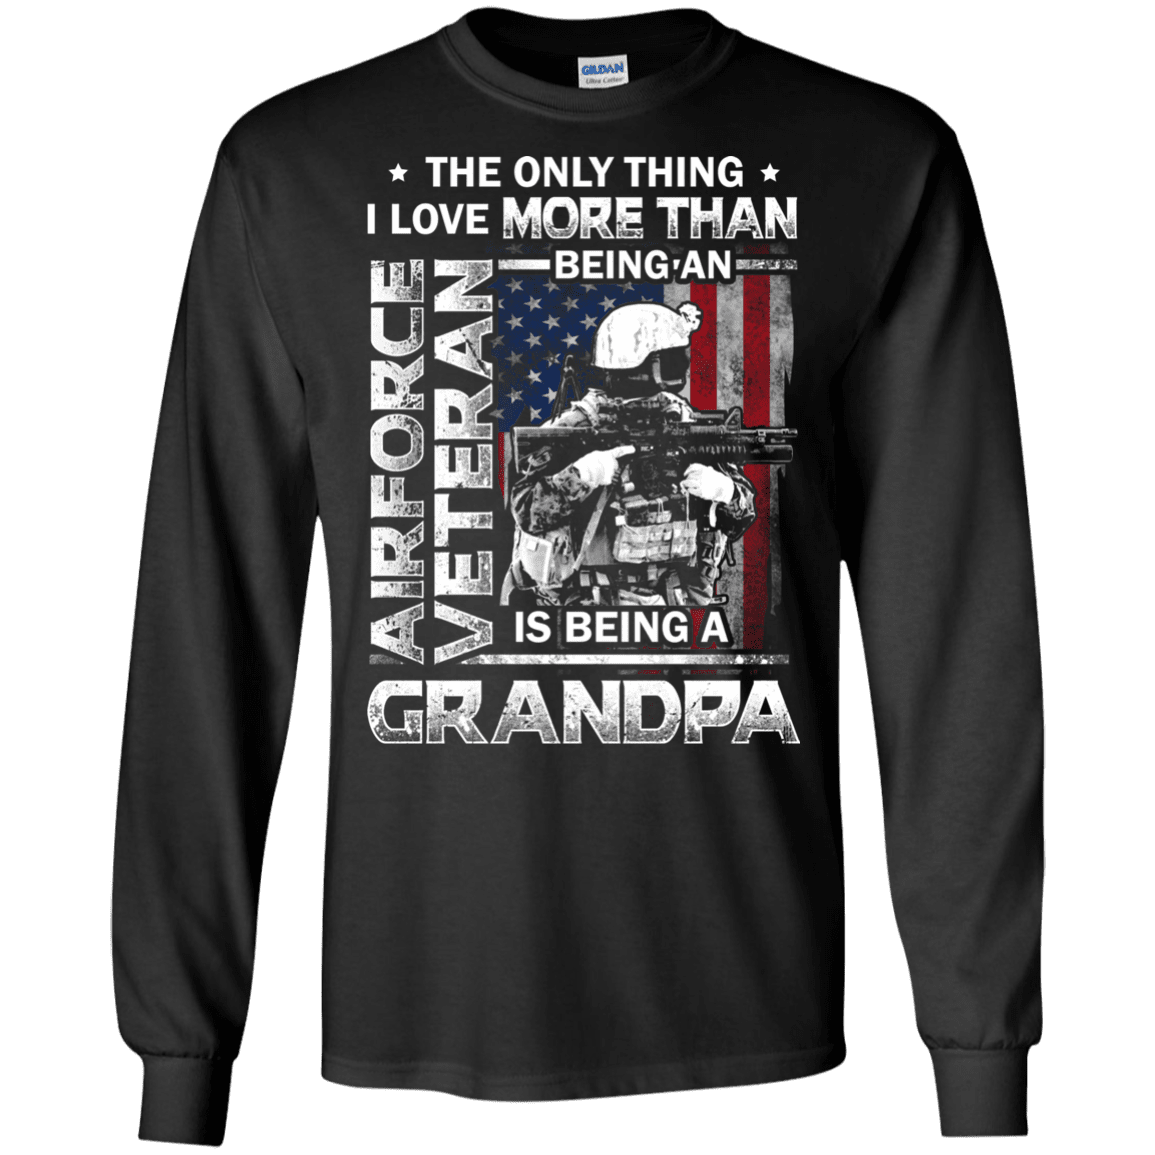 Military T-Shirt "Airforce Veteran I love Being A Grandpa Men" Front-TShirt-General-Veterans Nation